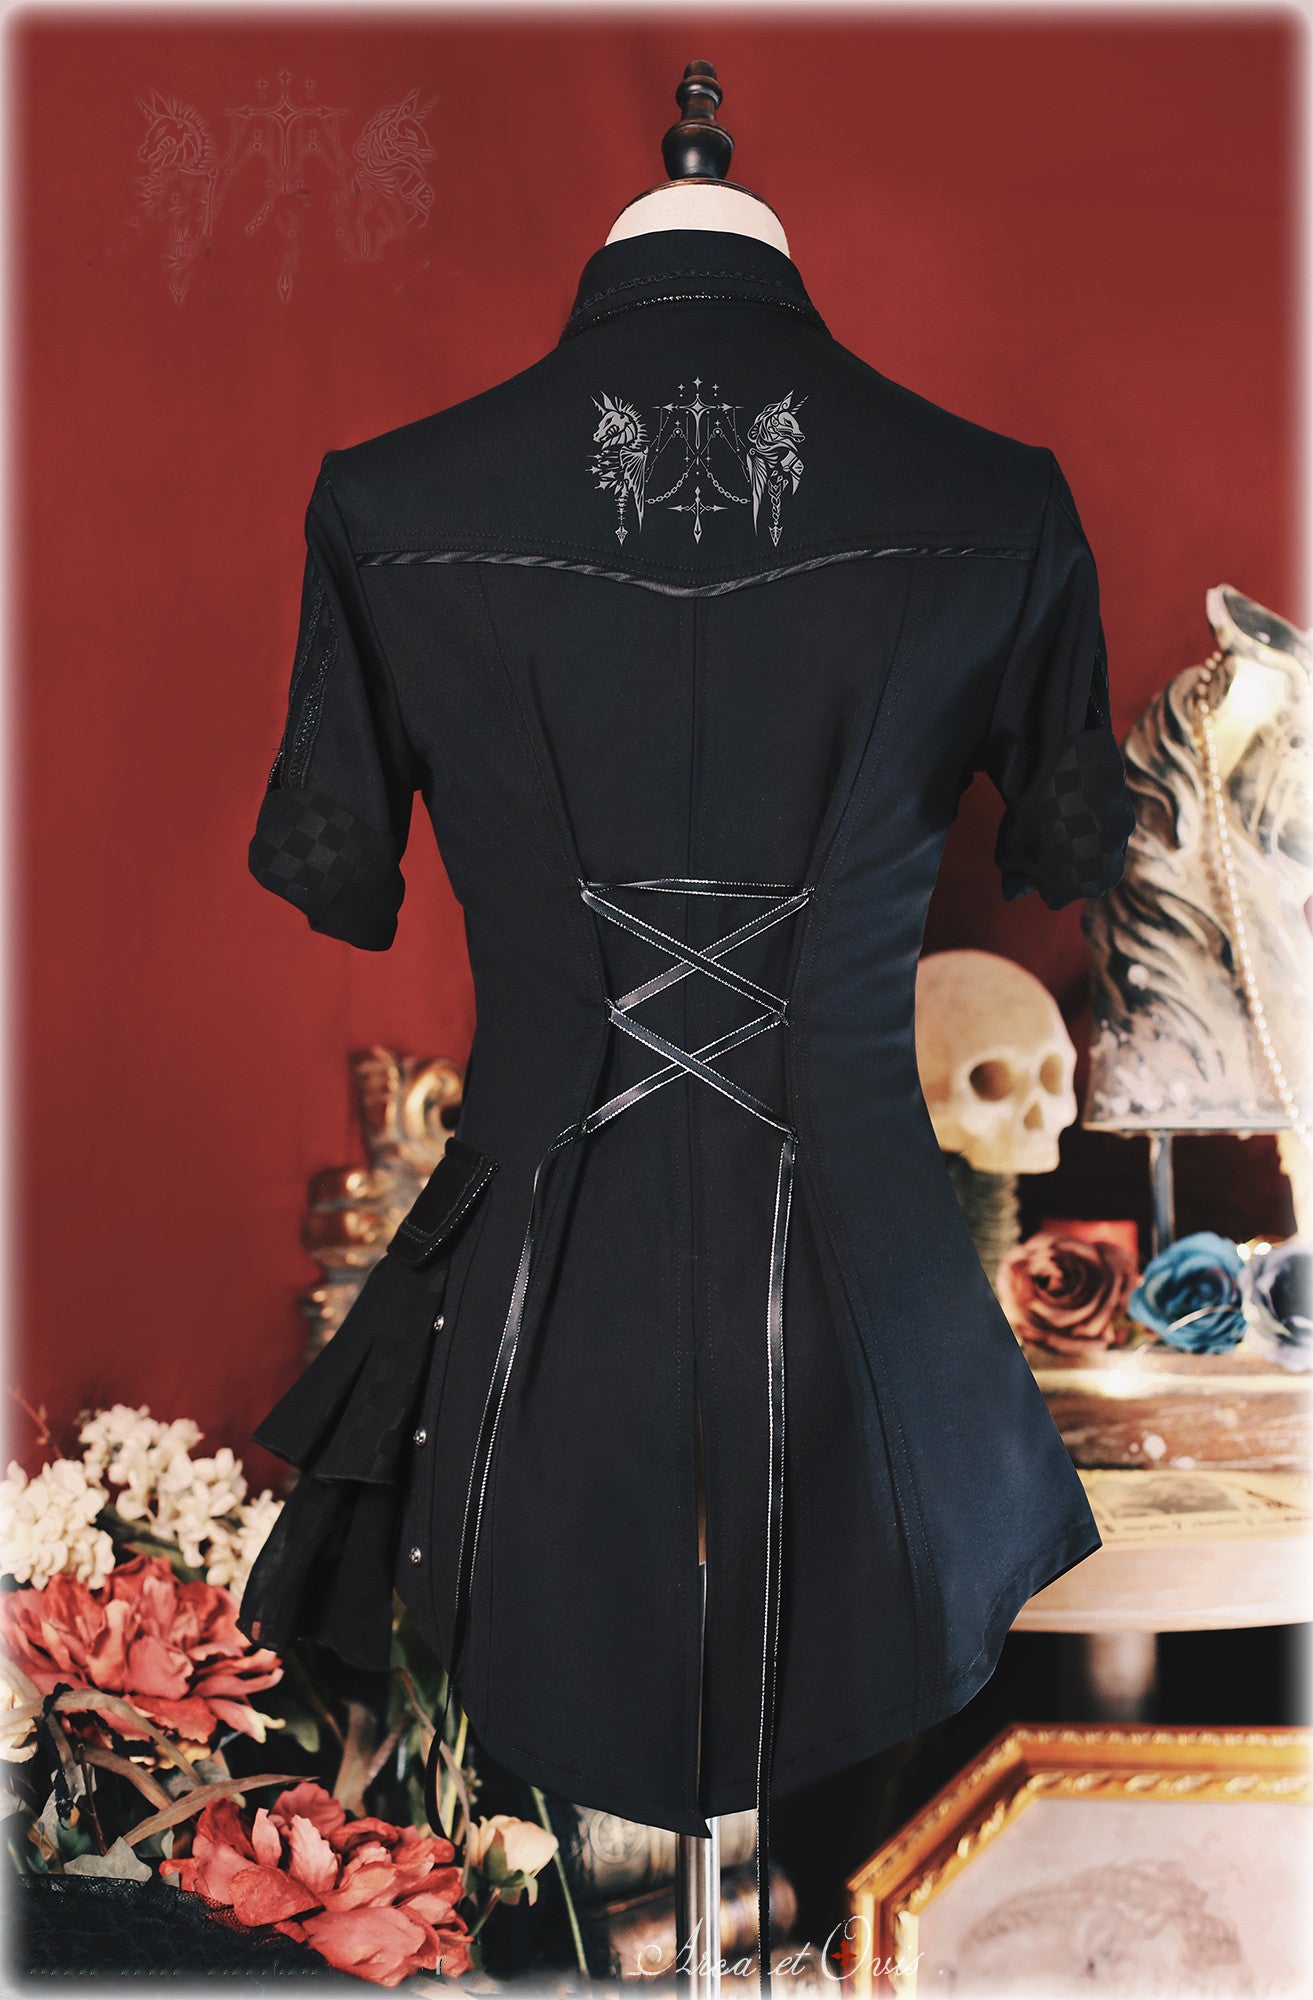 Arca et Ovis~Kodona Irregular Hemline Embroidery Ouji Lolita Blouse 155/82A black+stitchwork 